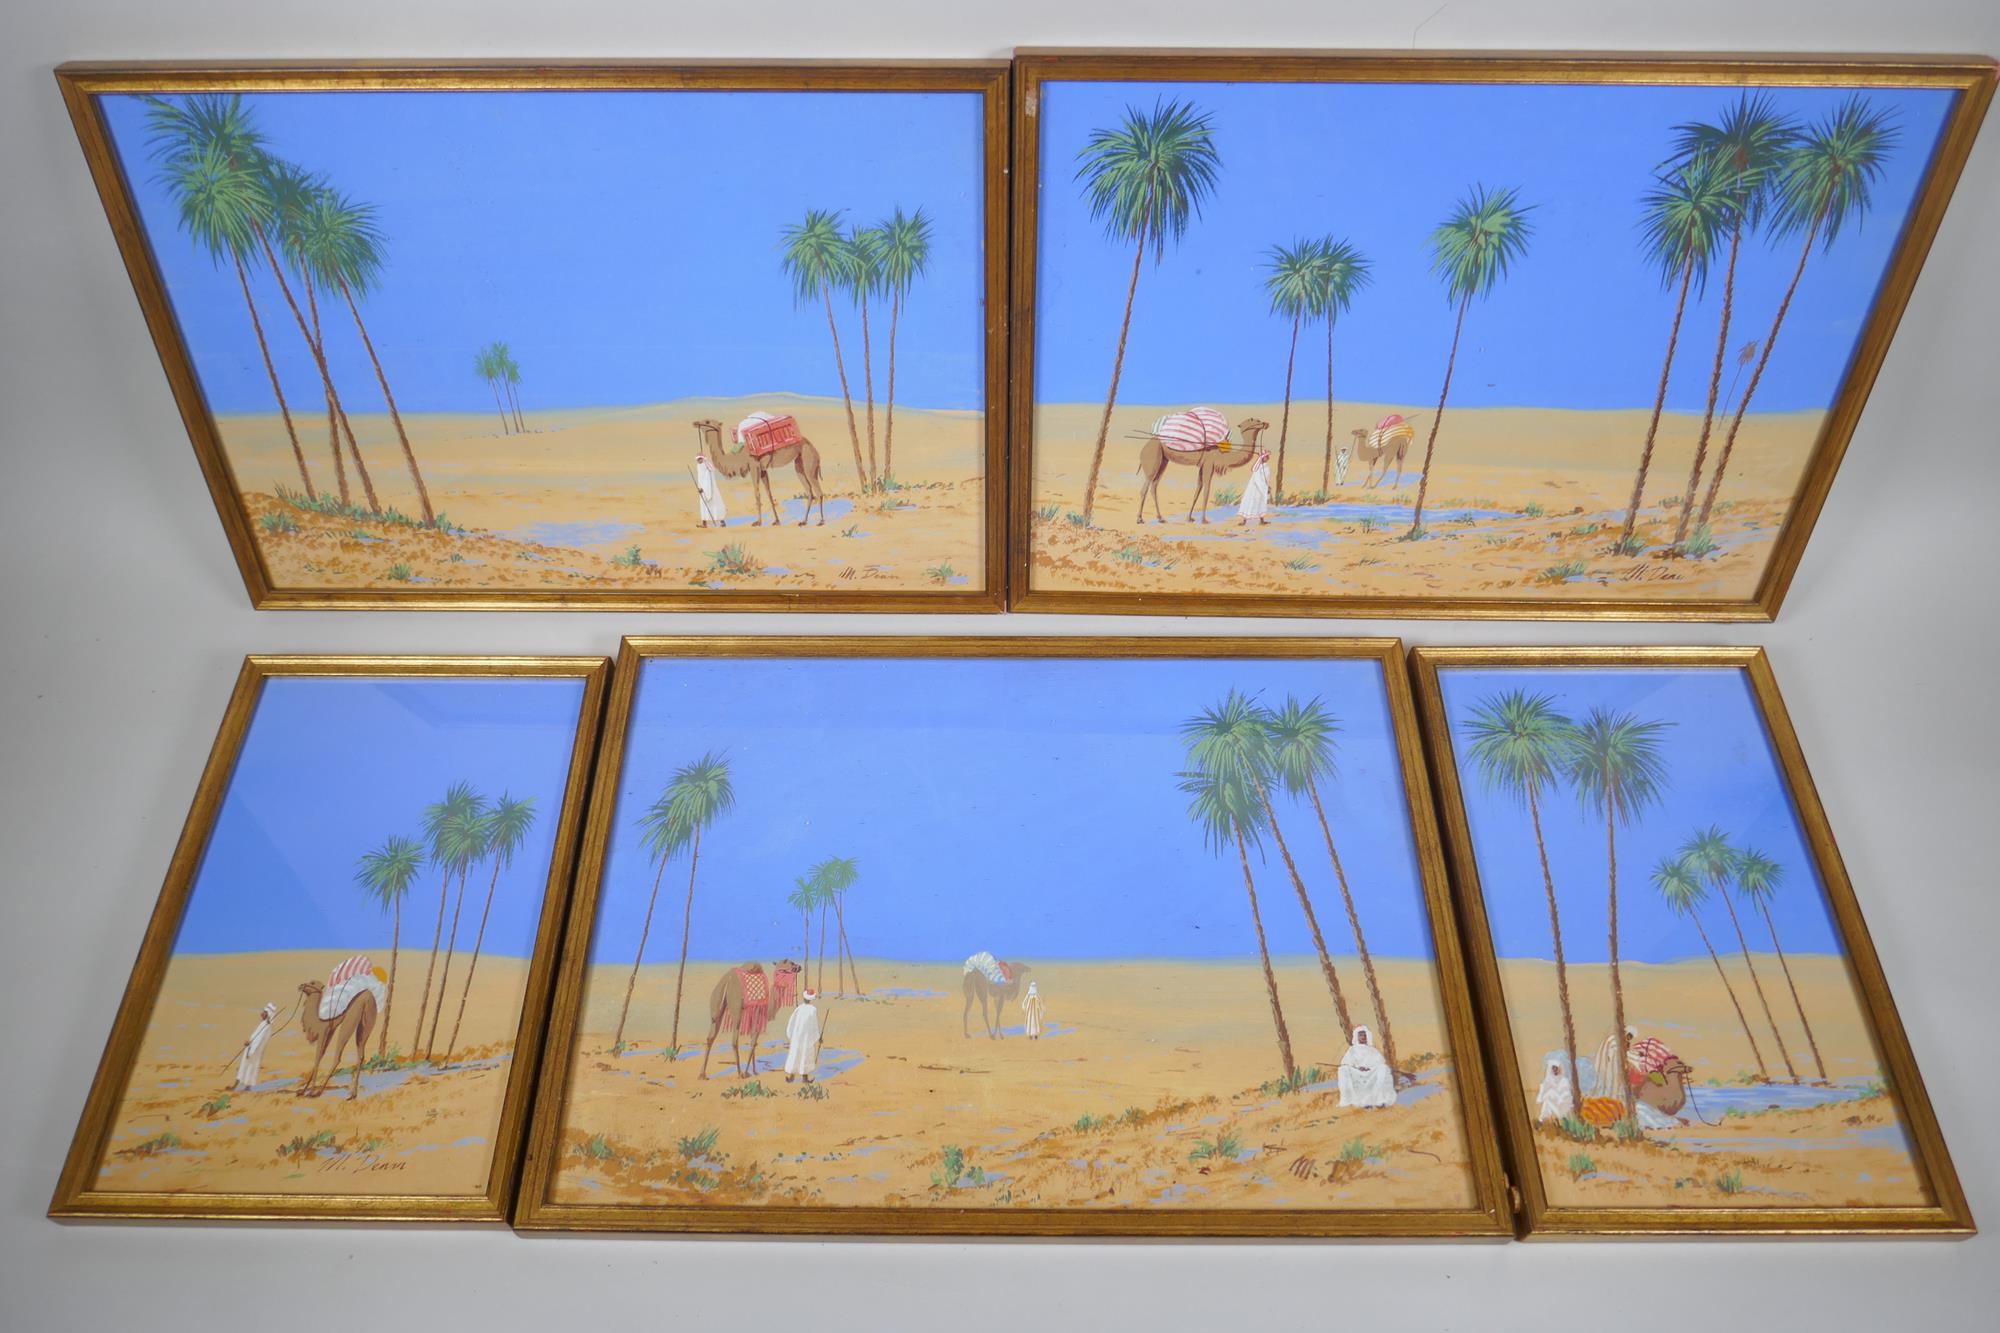 M. Dean, five desert landscapes with Arabs and camels, gouache on paper, largest 45 x 33cm